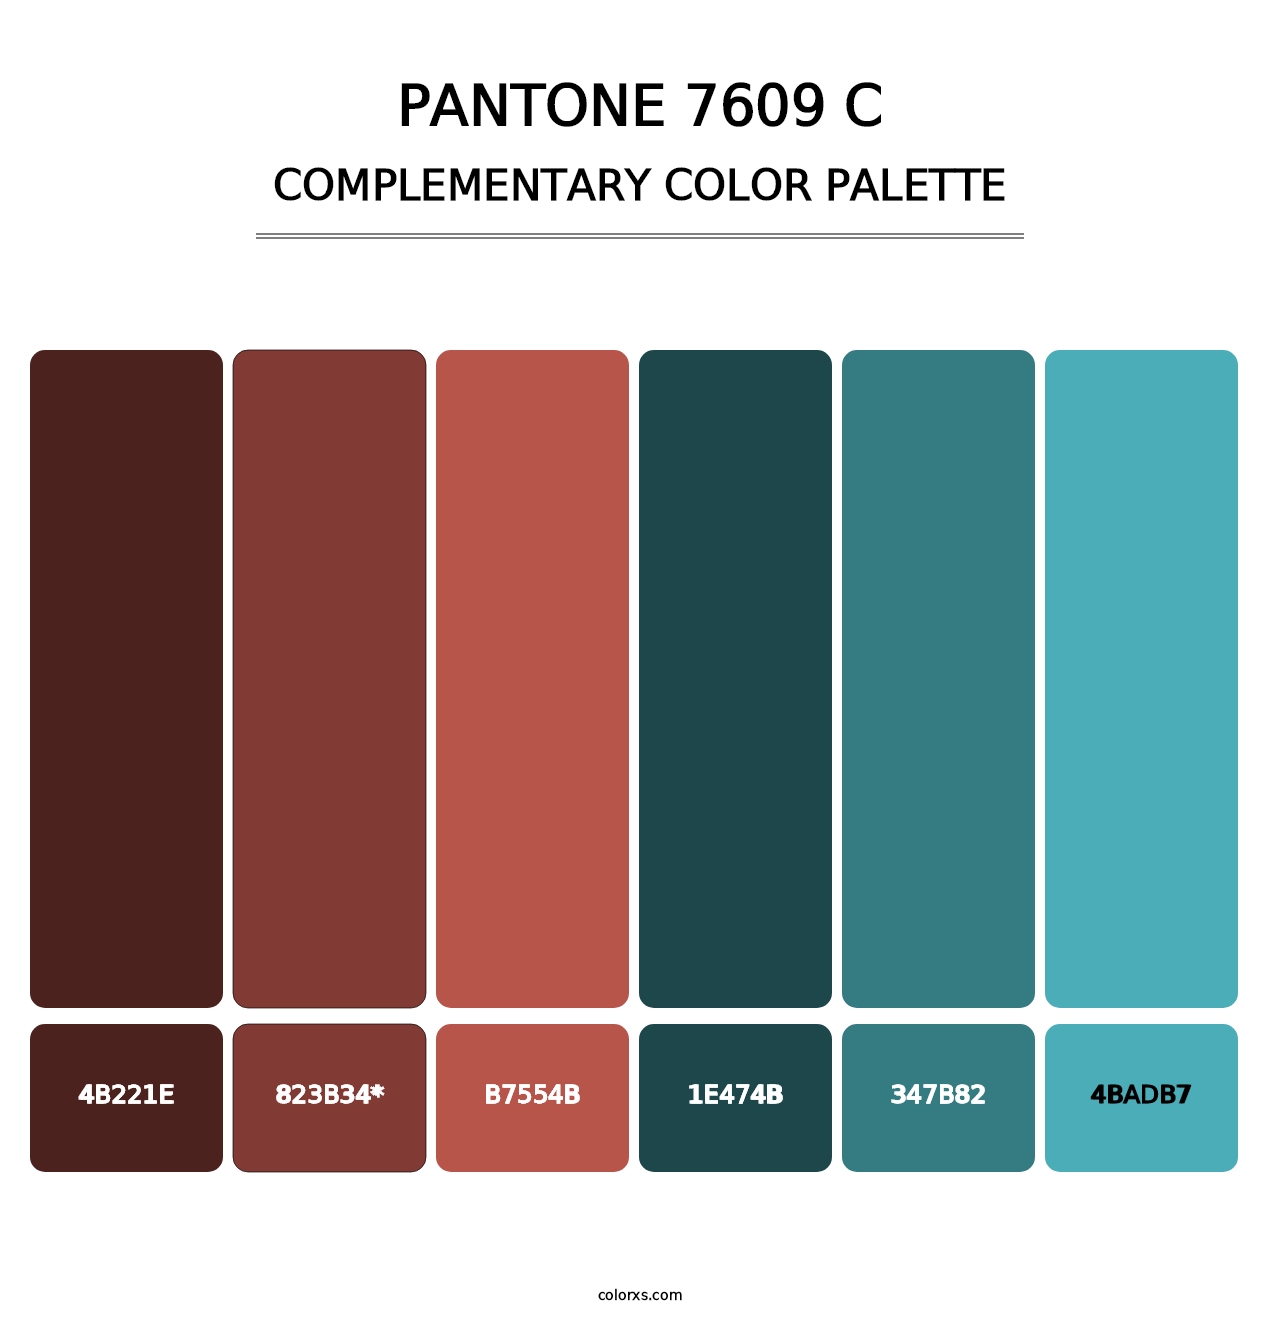 PANTONE 7609 C - Complementary Color Palette